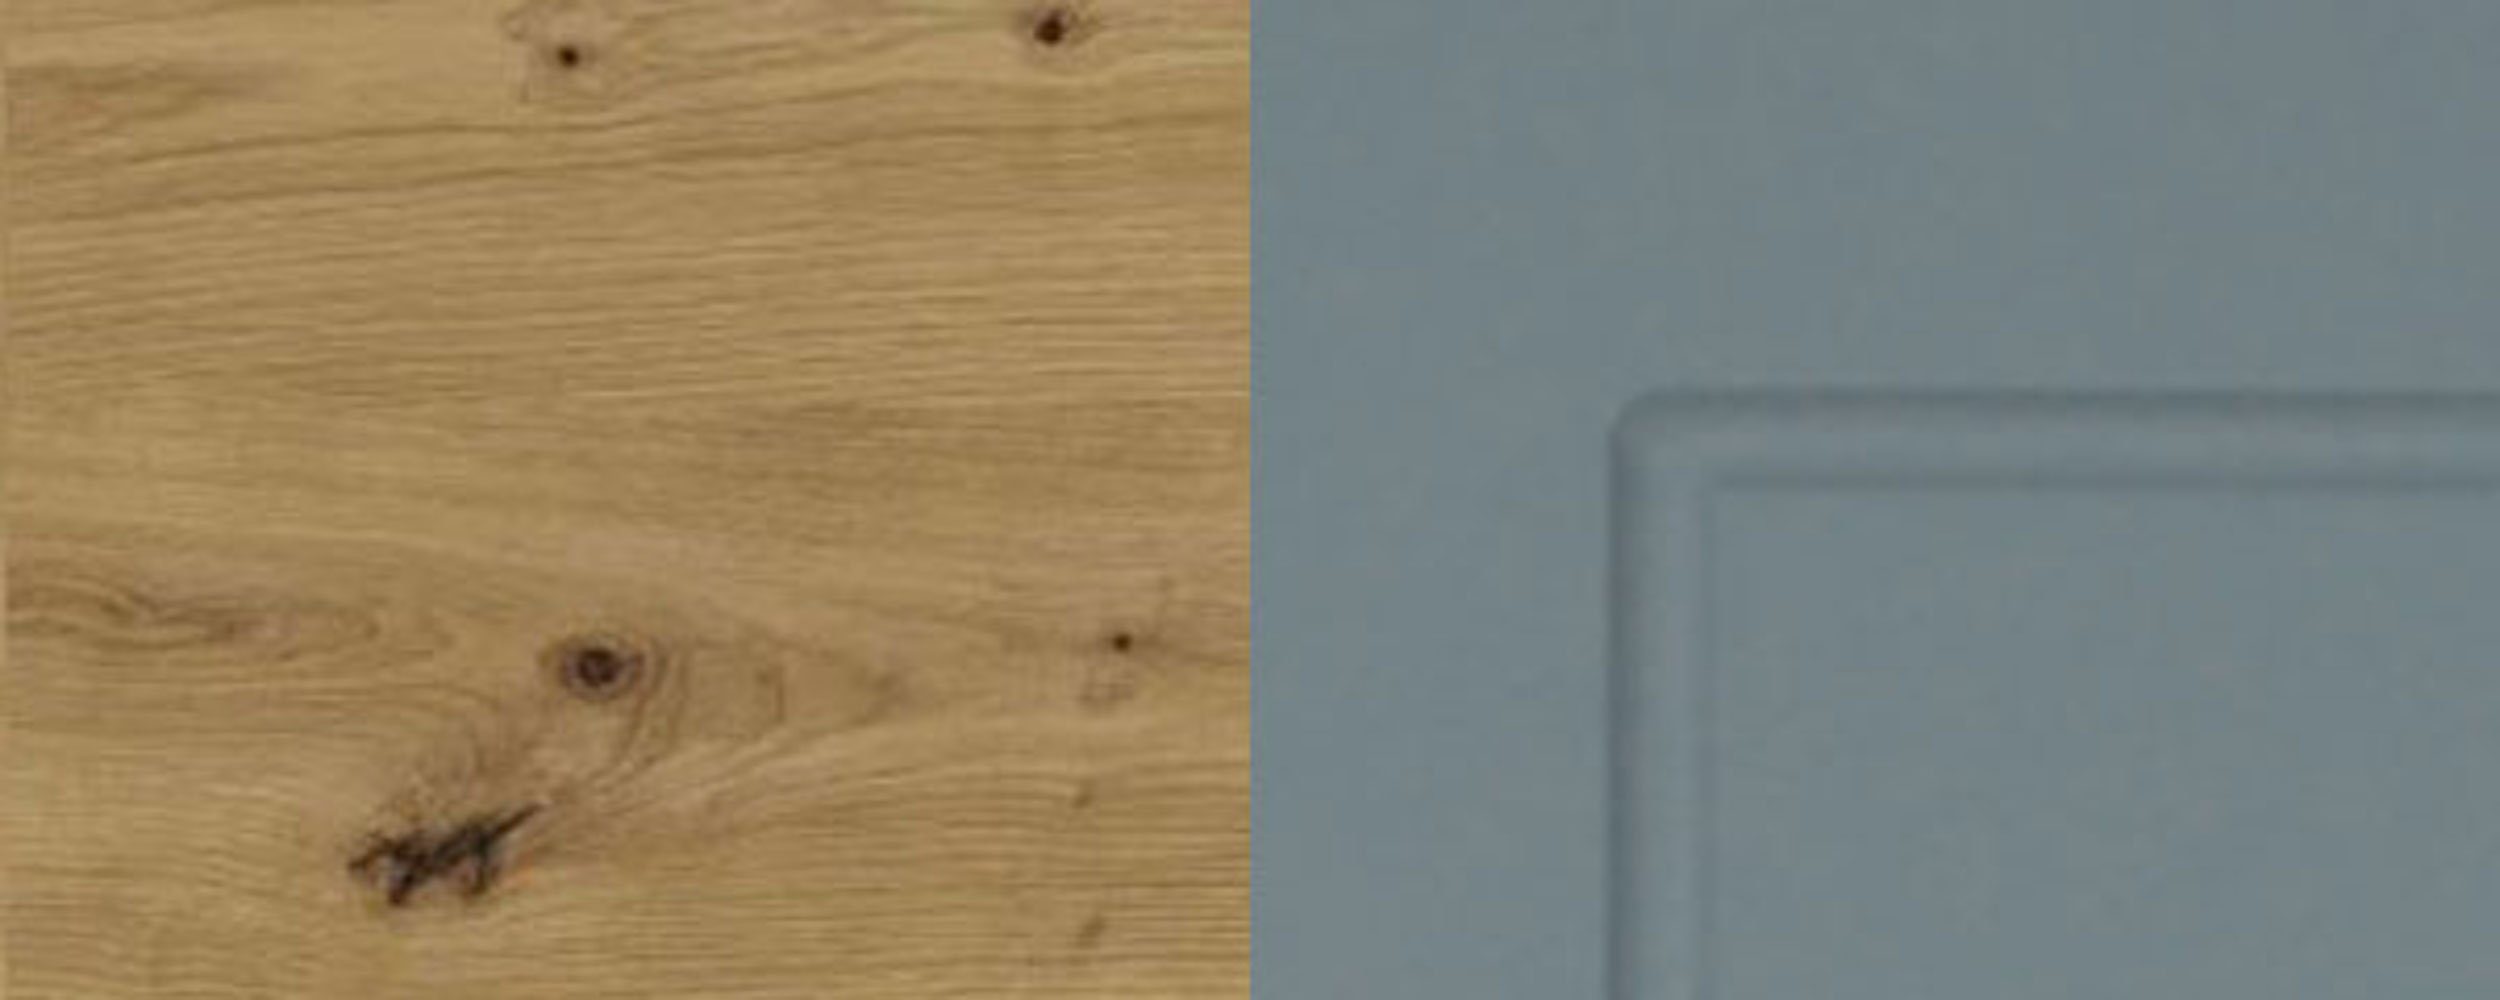 Korpusfarbe (Kvantum) Kvantum matt & 1 90cm Front- wählbar Klapptür Milchglaseinsatz mint Klapphängeschrank Feldmann-Wohnen